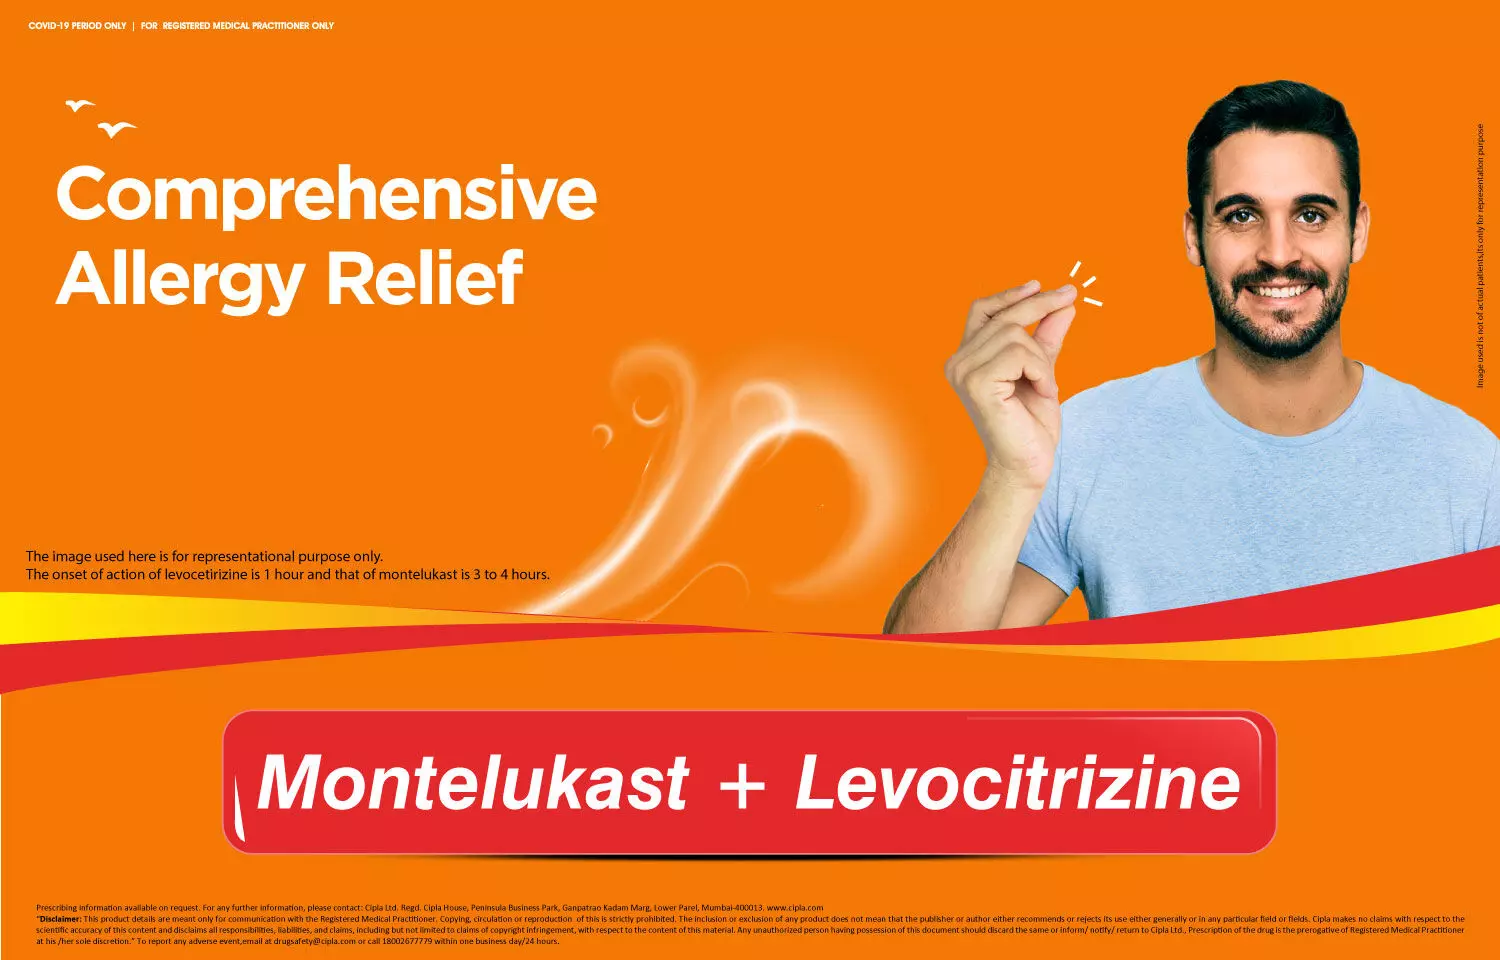 Managing co-existing allergic rhinitis and asthma: Analyzing the role of Montelukast-levocetirizine combination